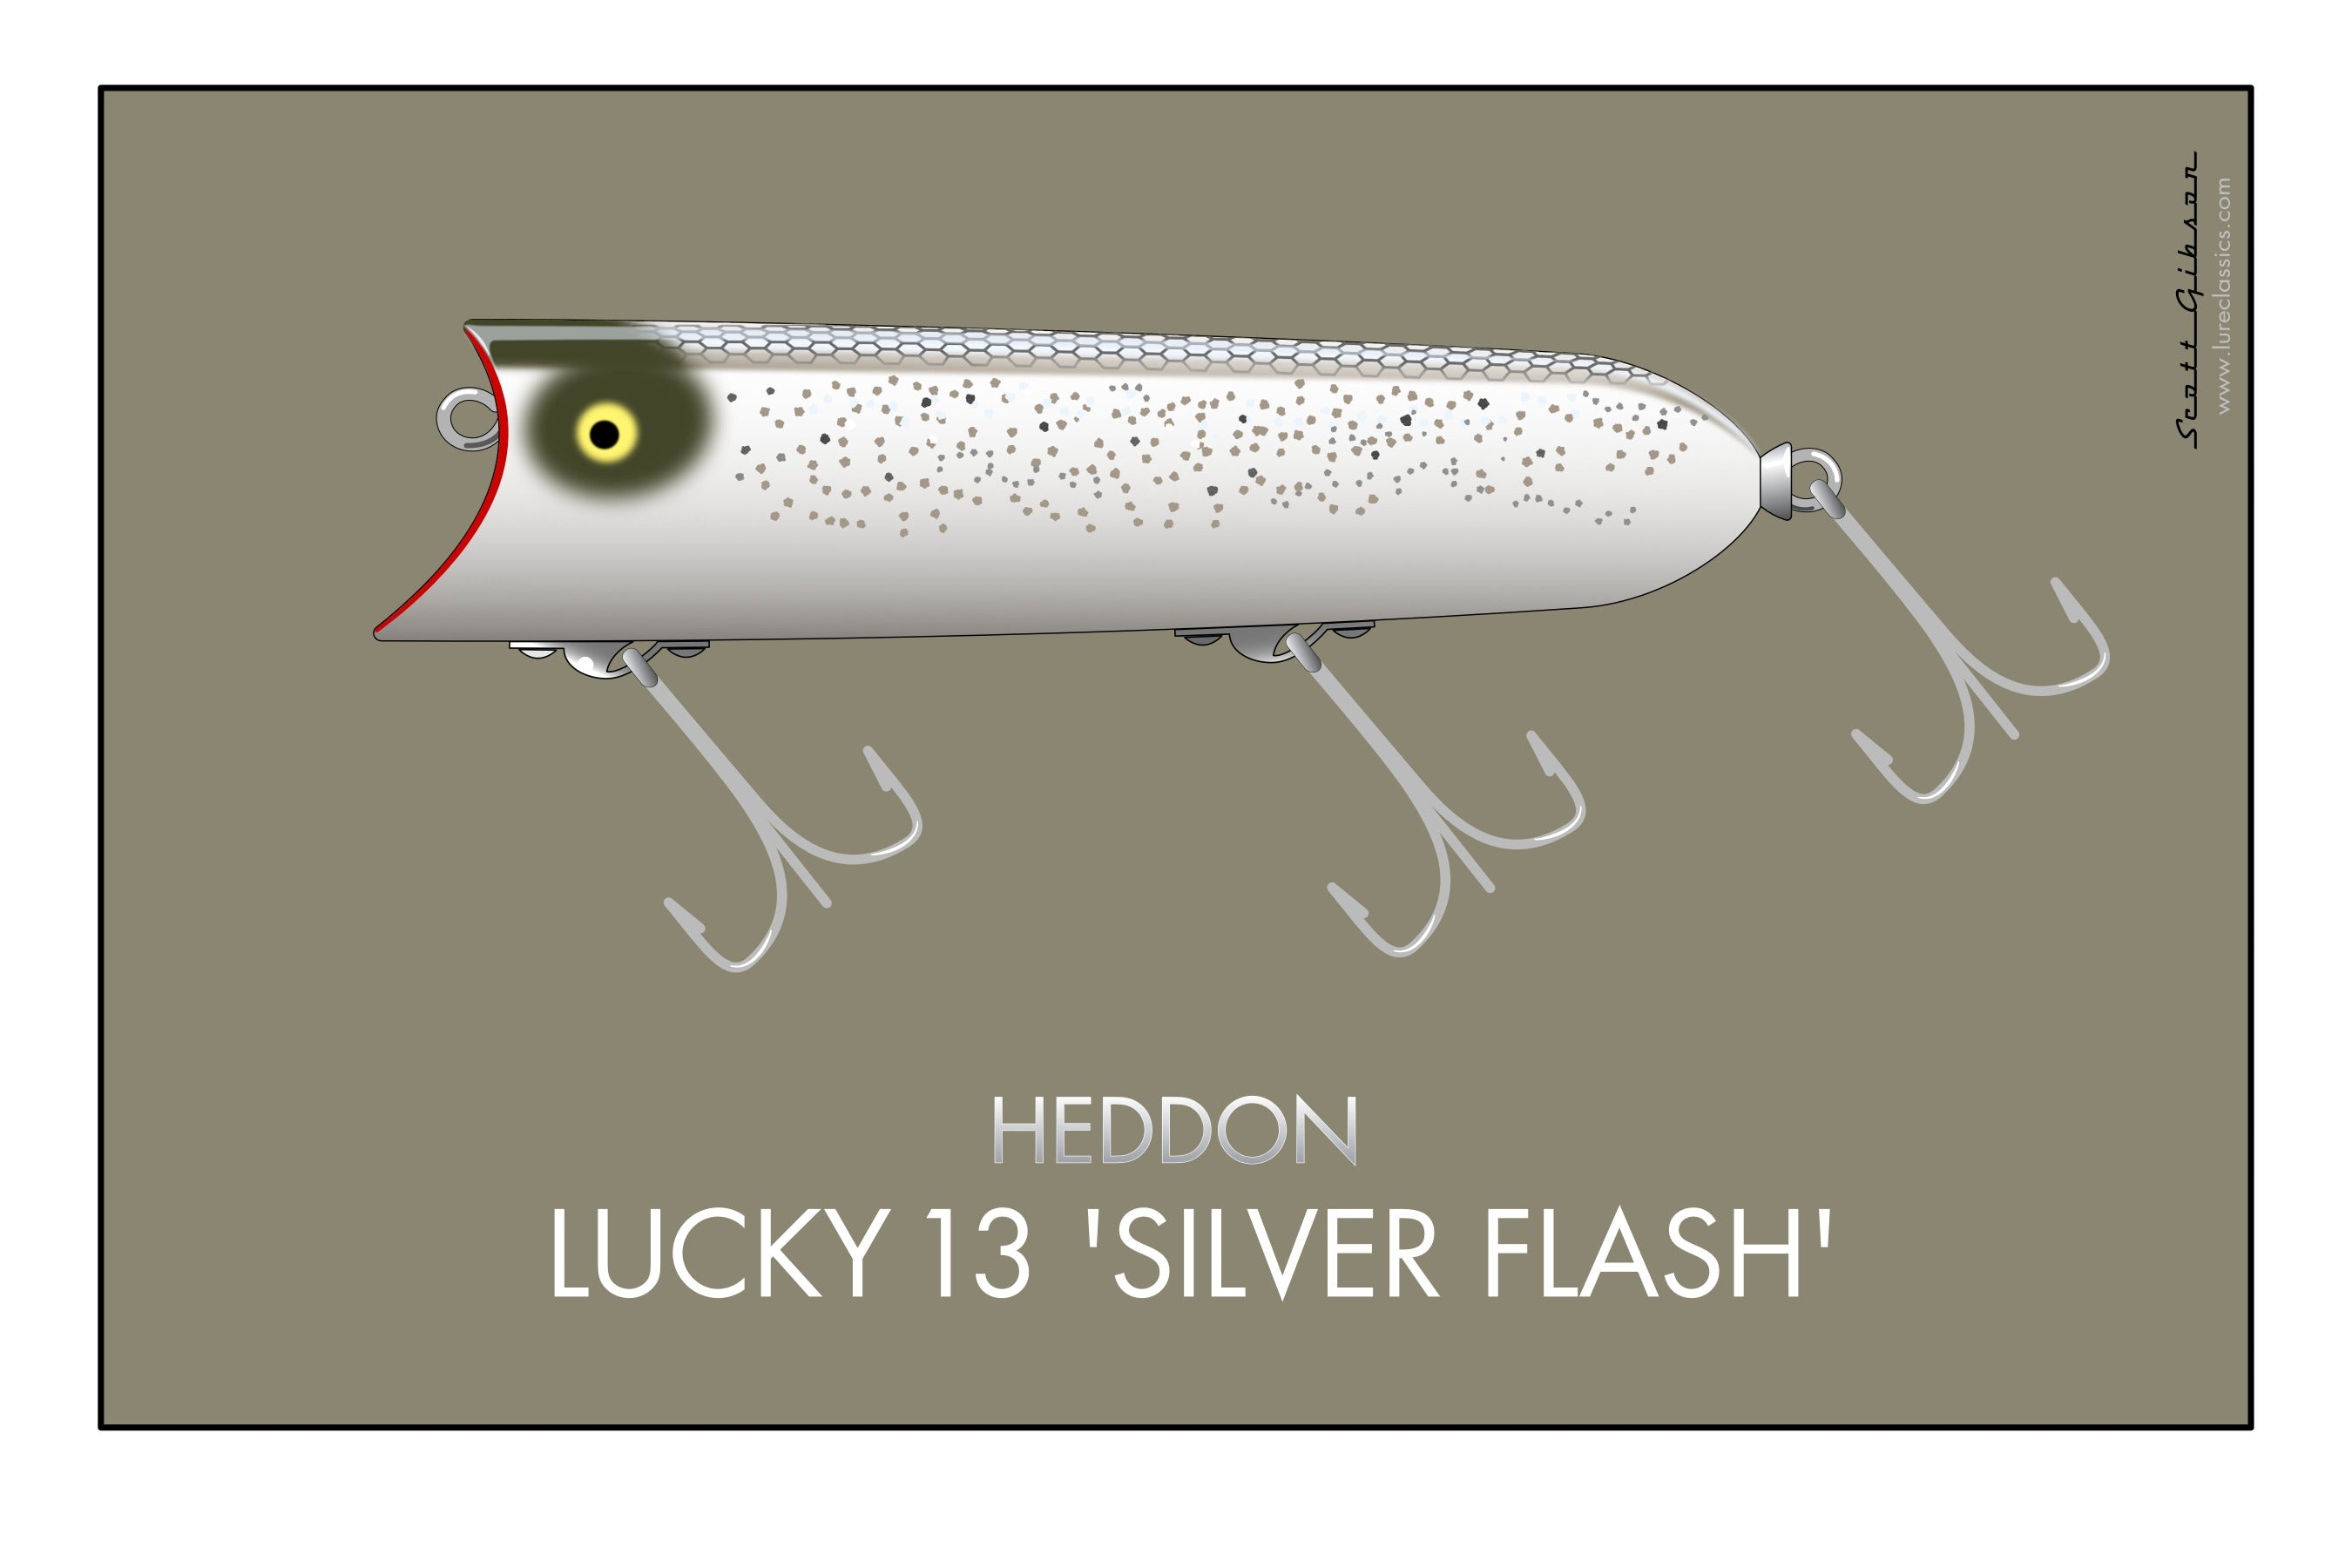 Heddon Lucky 13 'Silver Flash' | Fishing Lure Art